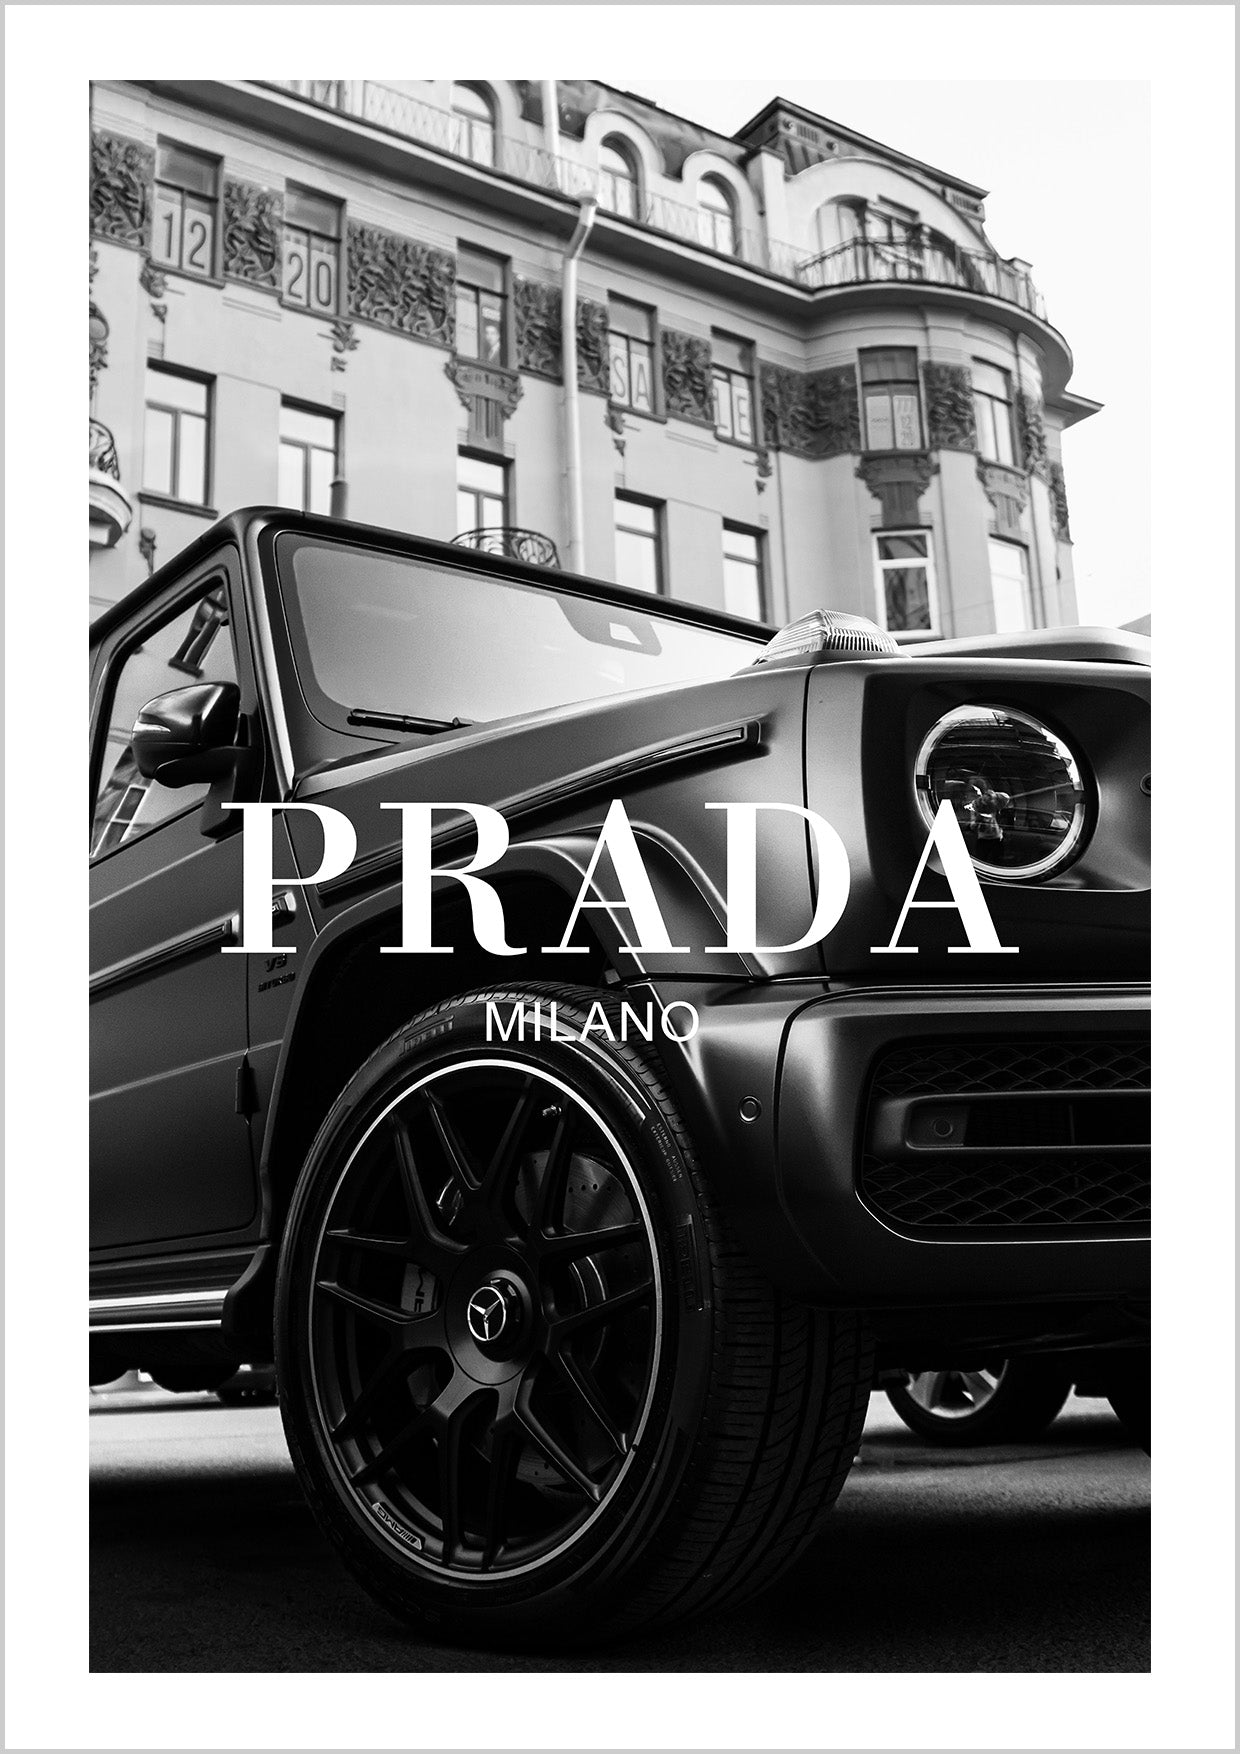 Mercedes G-Class Prada Milano Poster